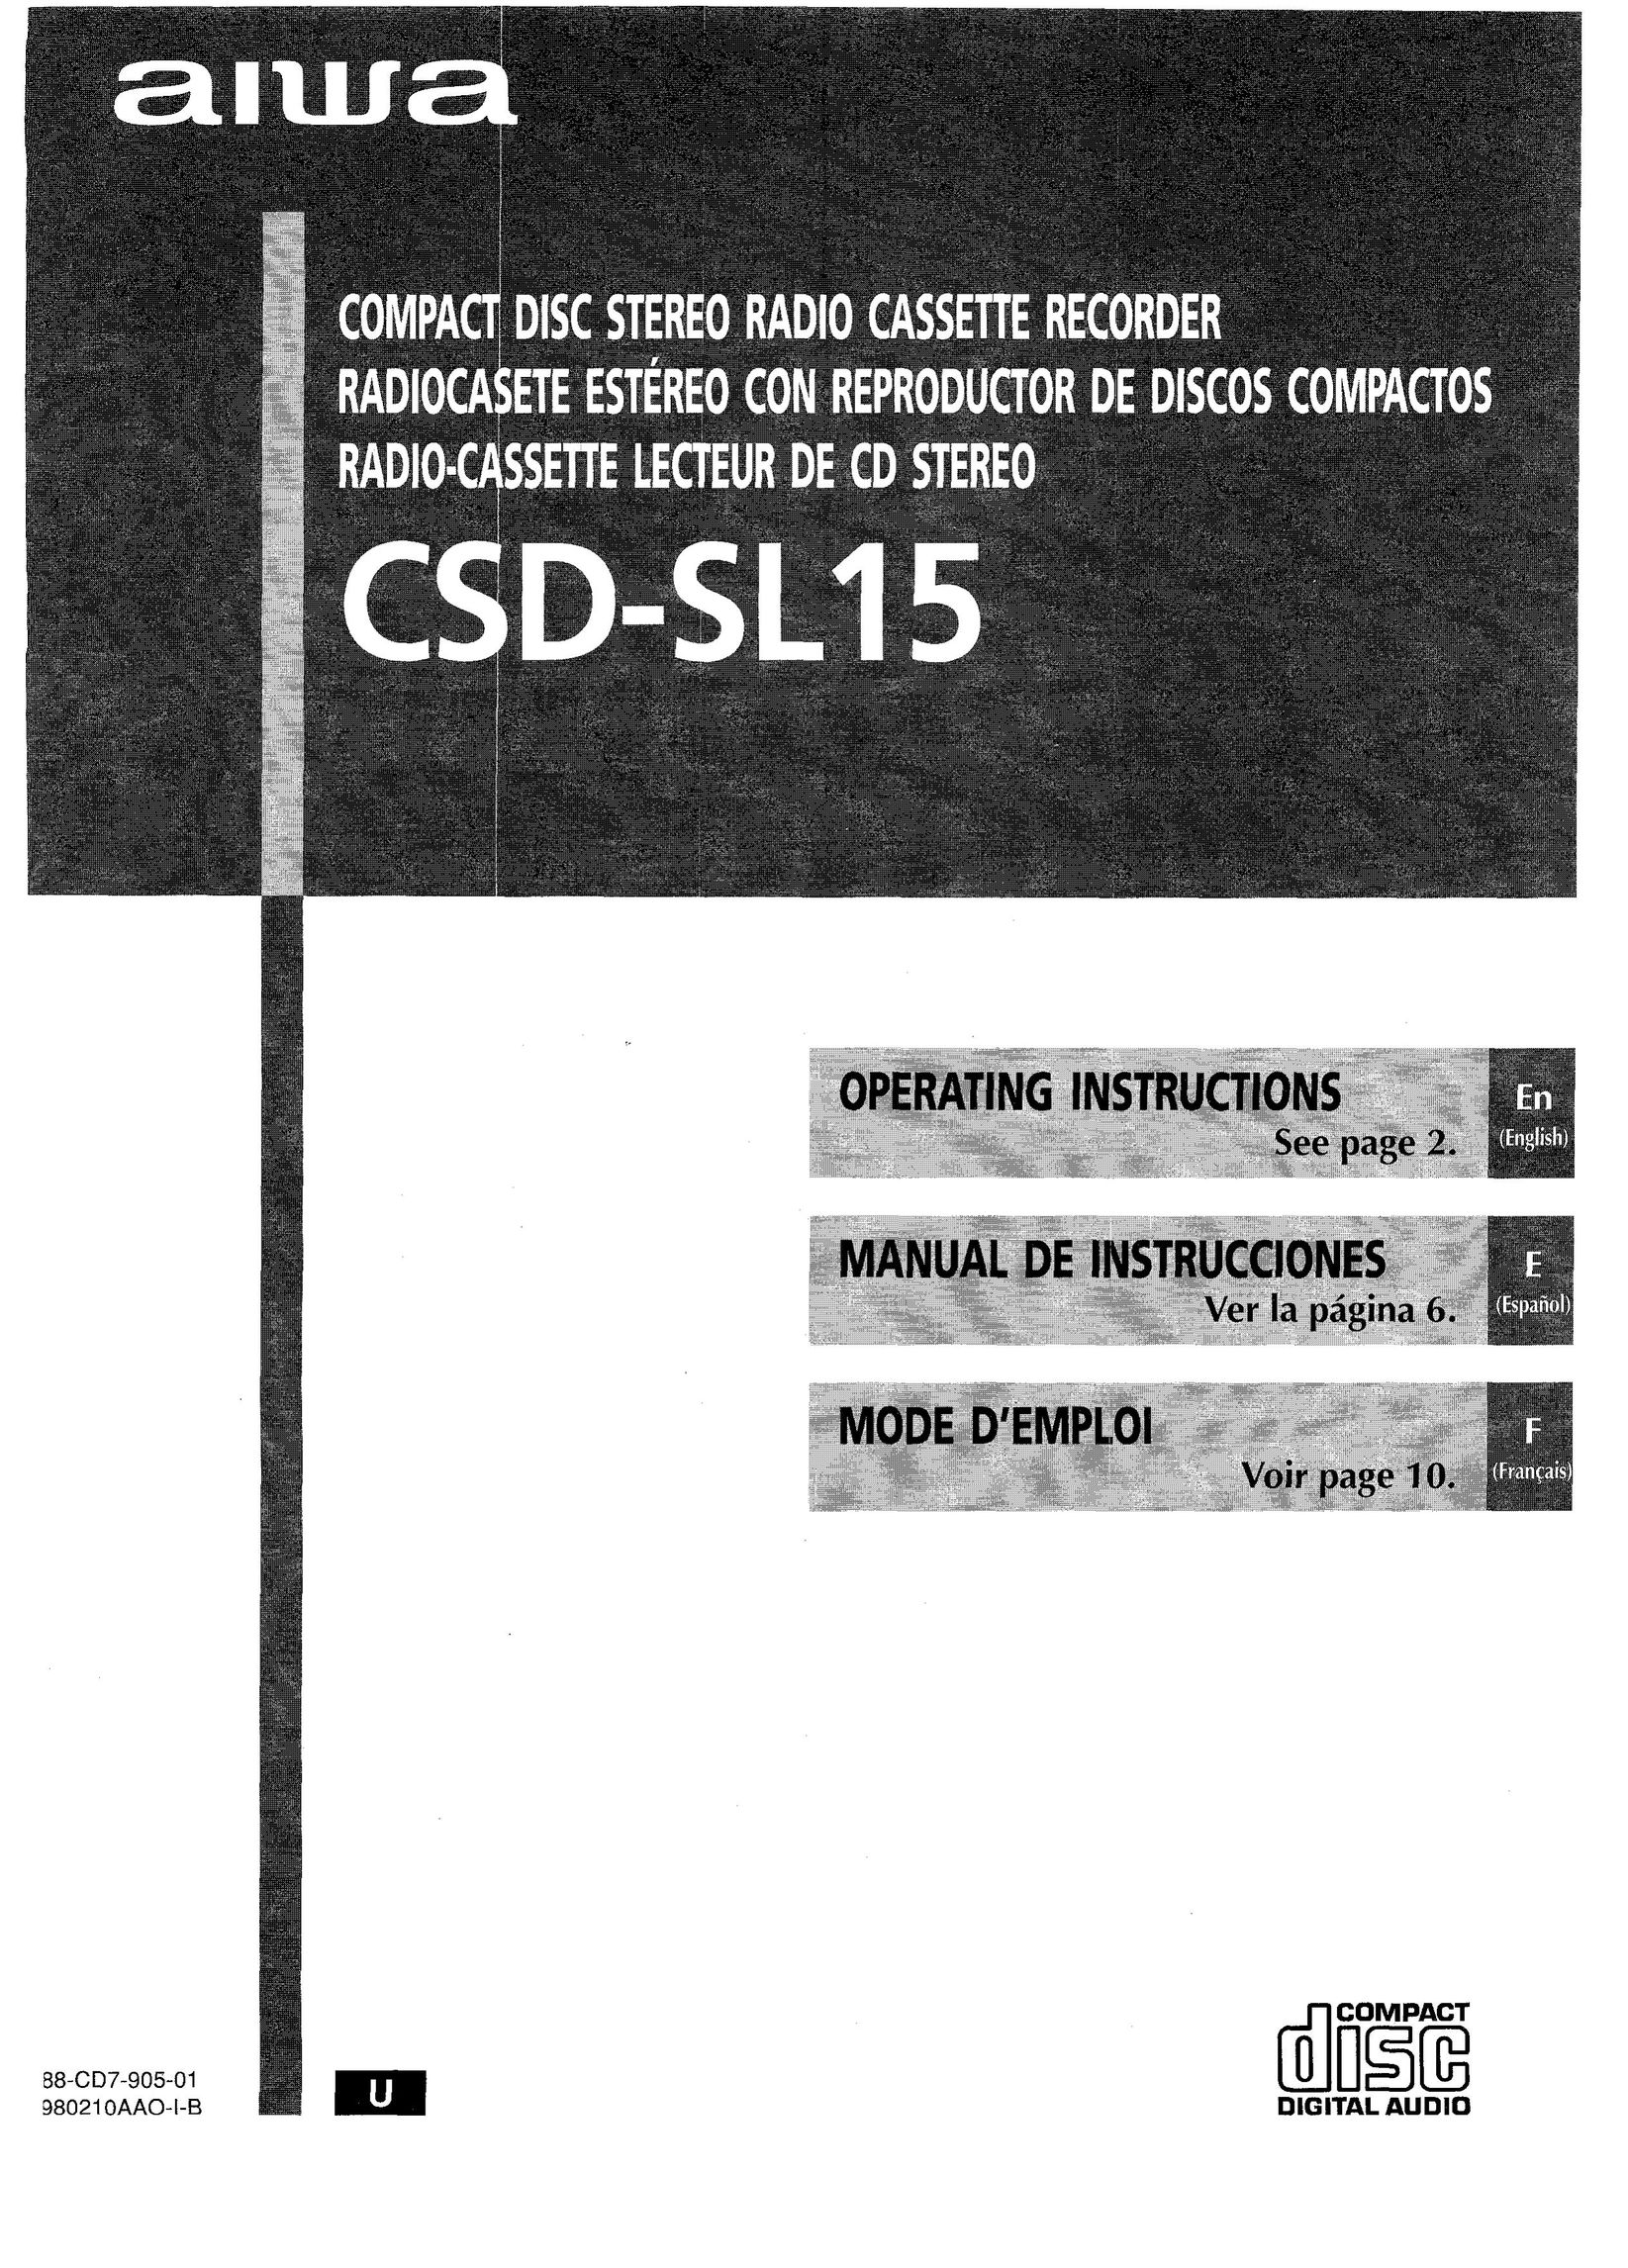 Aiwa CSD-SL15 CD Player User Manual (Page 1)